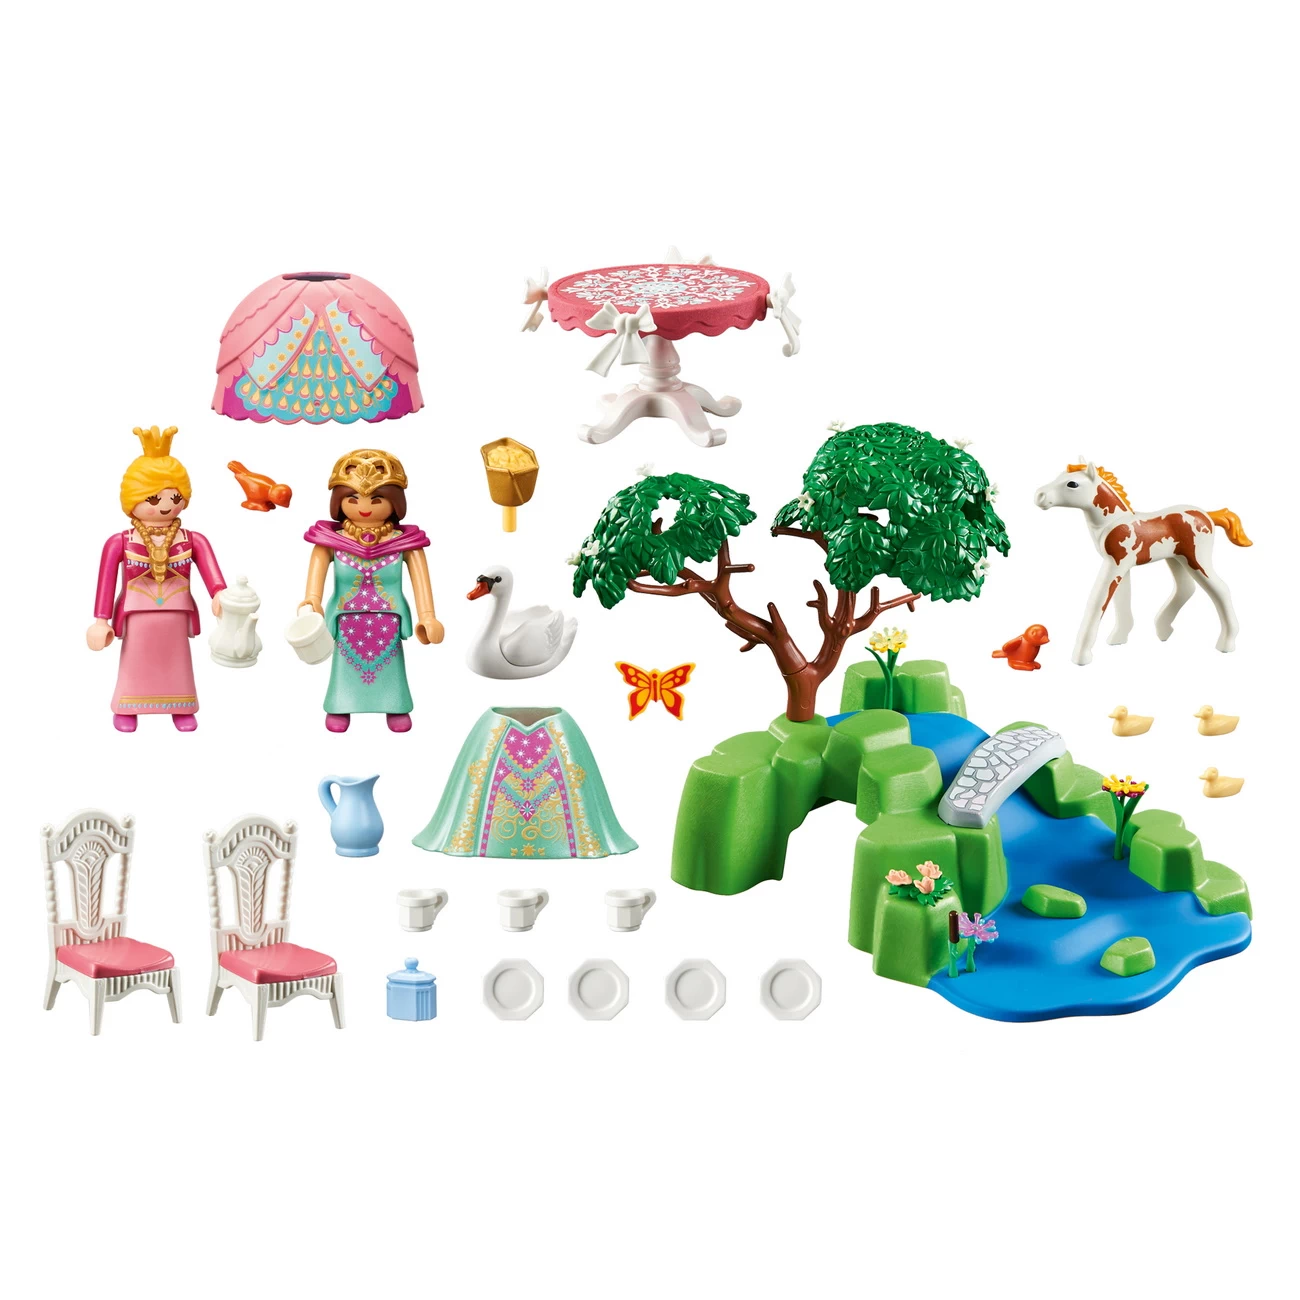 Playmobil 70961 - Prinzessinnen Picknick mit Fohlen (Princess) Promo Pack